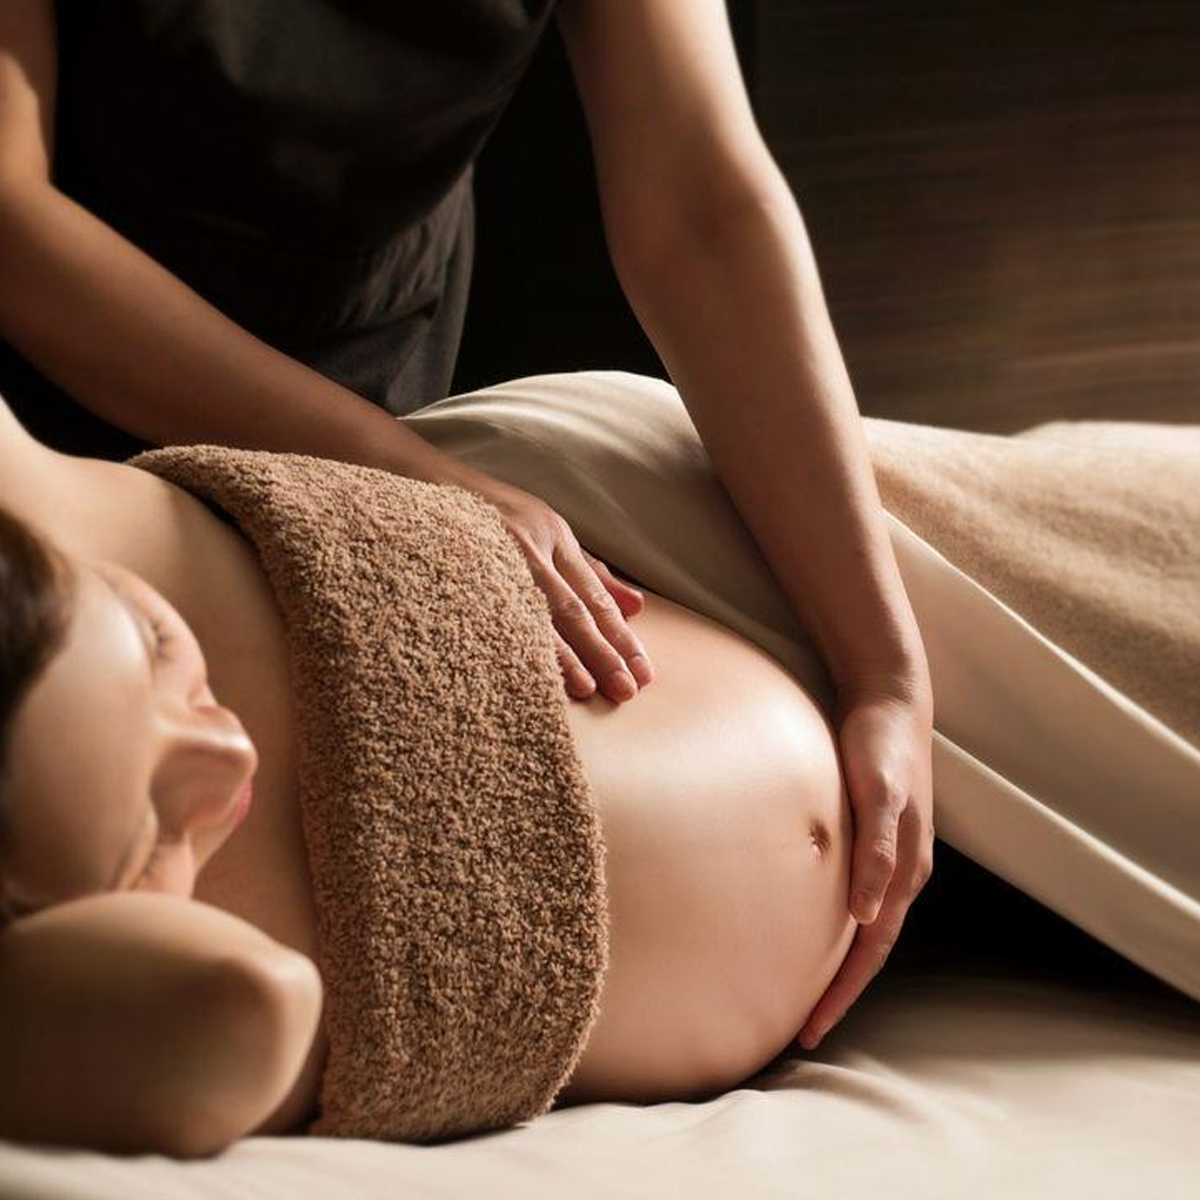 Especial para embarazadas “Mum to Be” 80 minutos en Spa TBC Ritz